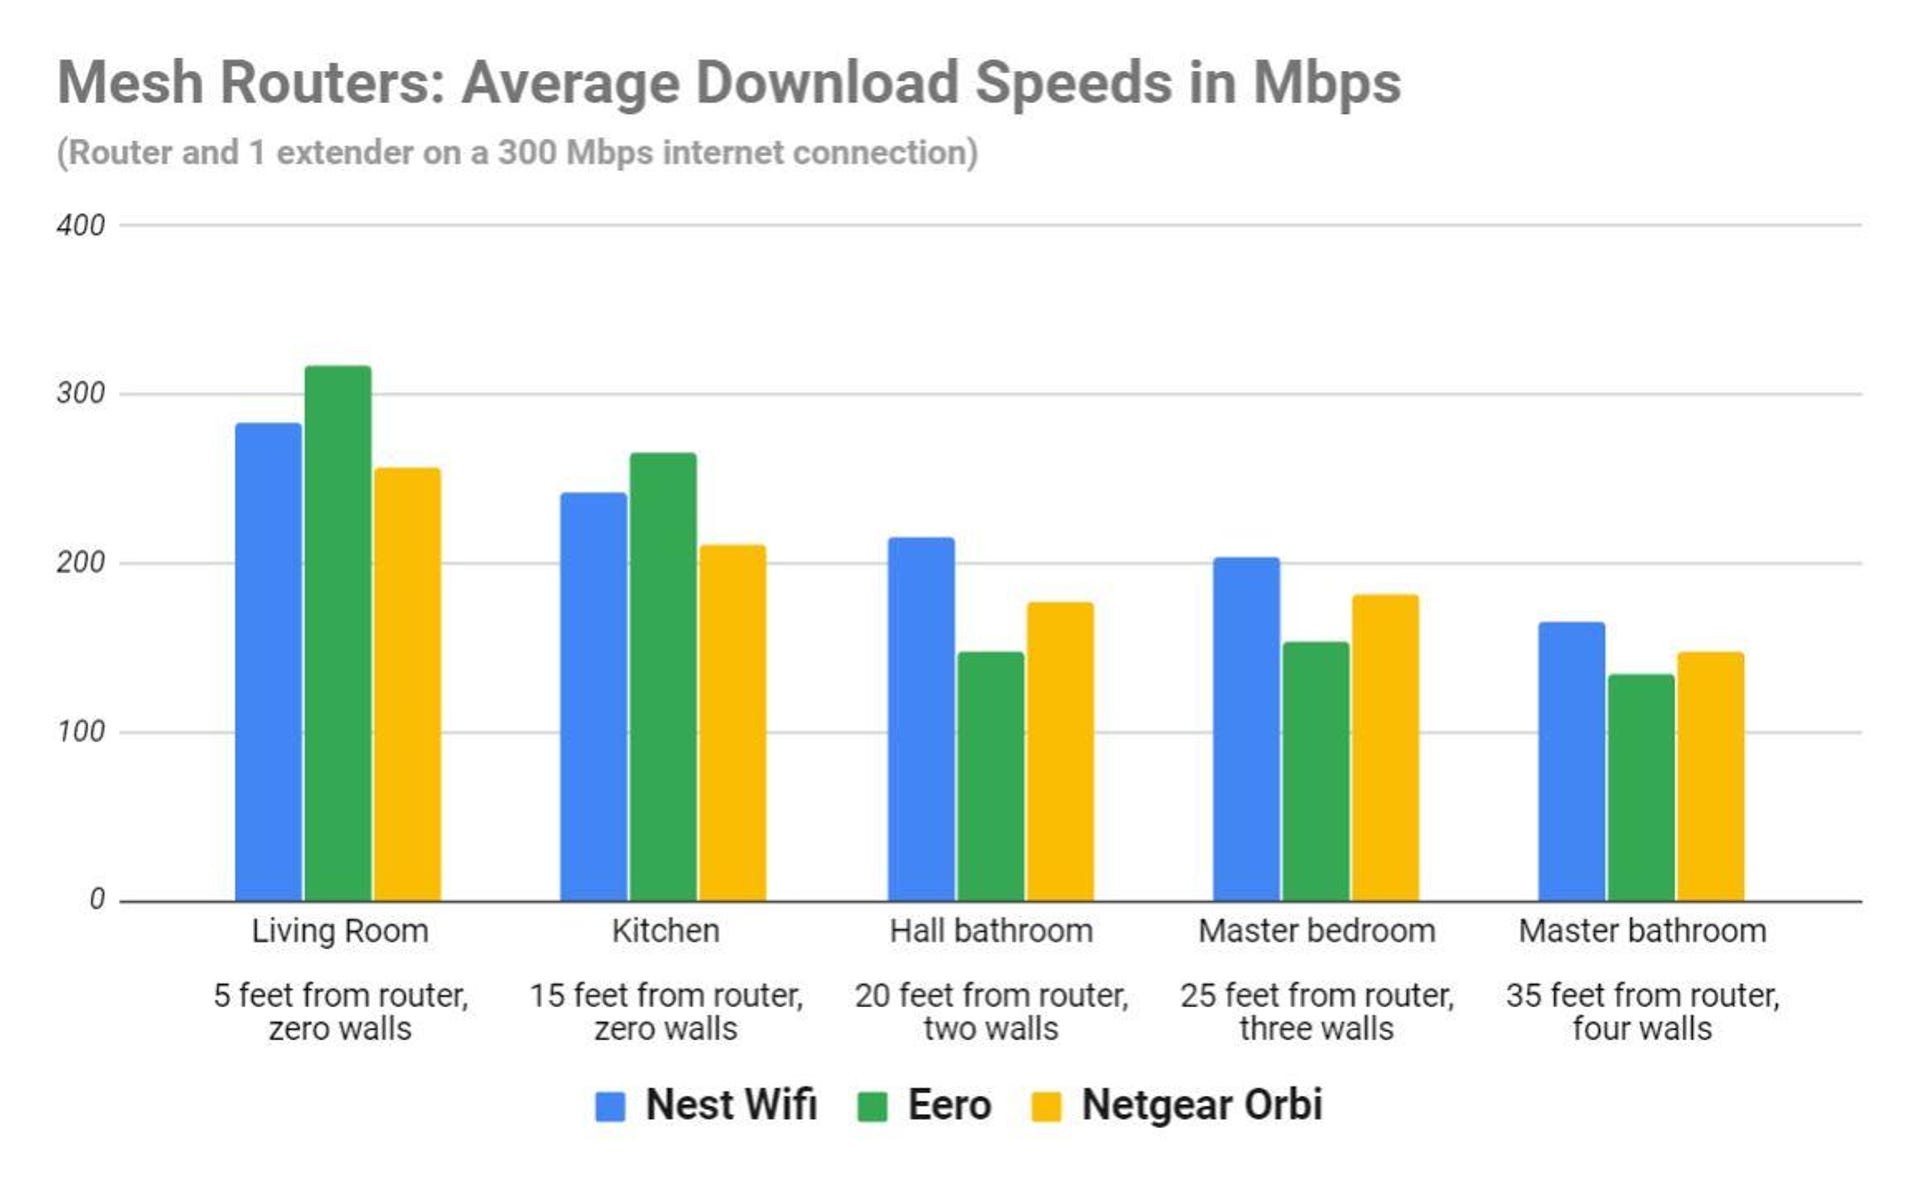 google-nest-wifi-eero-netgear-orbi-mesh-router-speed-tests